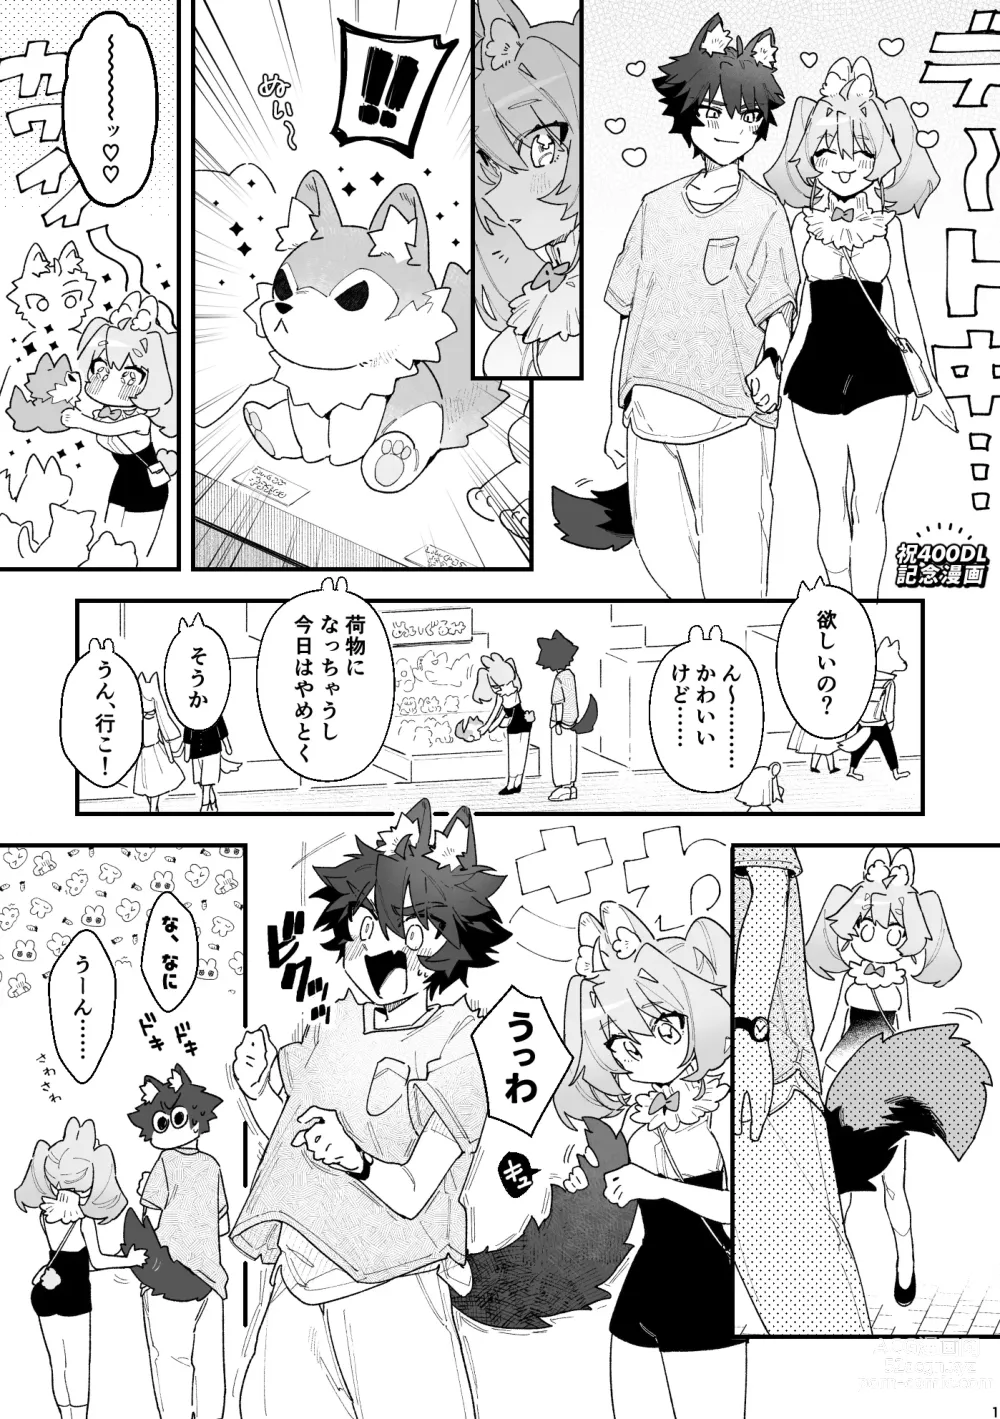 Page 44 of doujinshi ♂ ga Uke. Usagi-chan x Ookami-kun